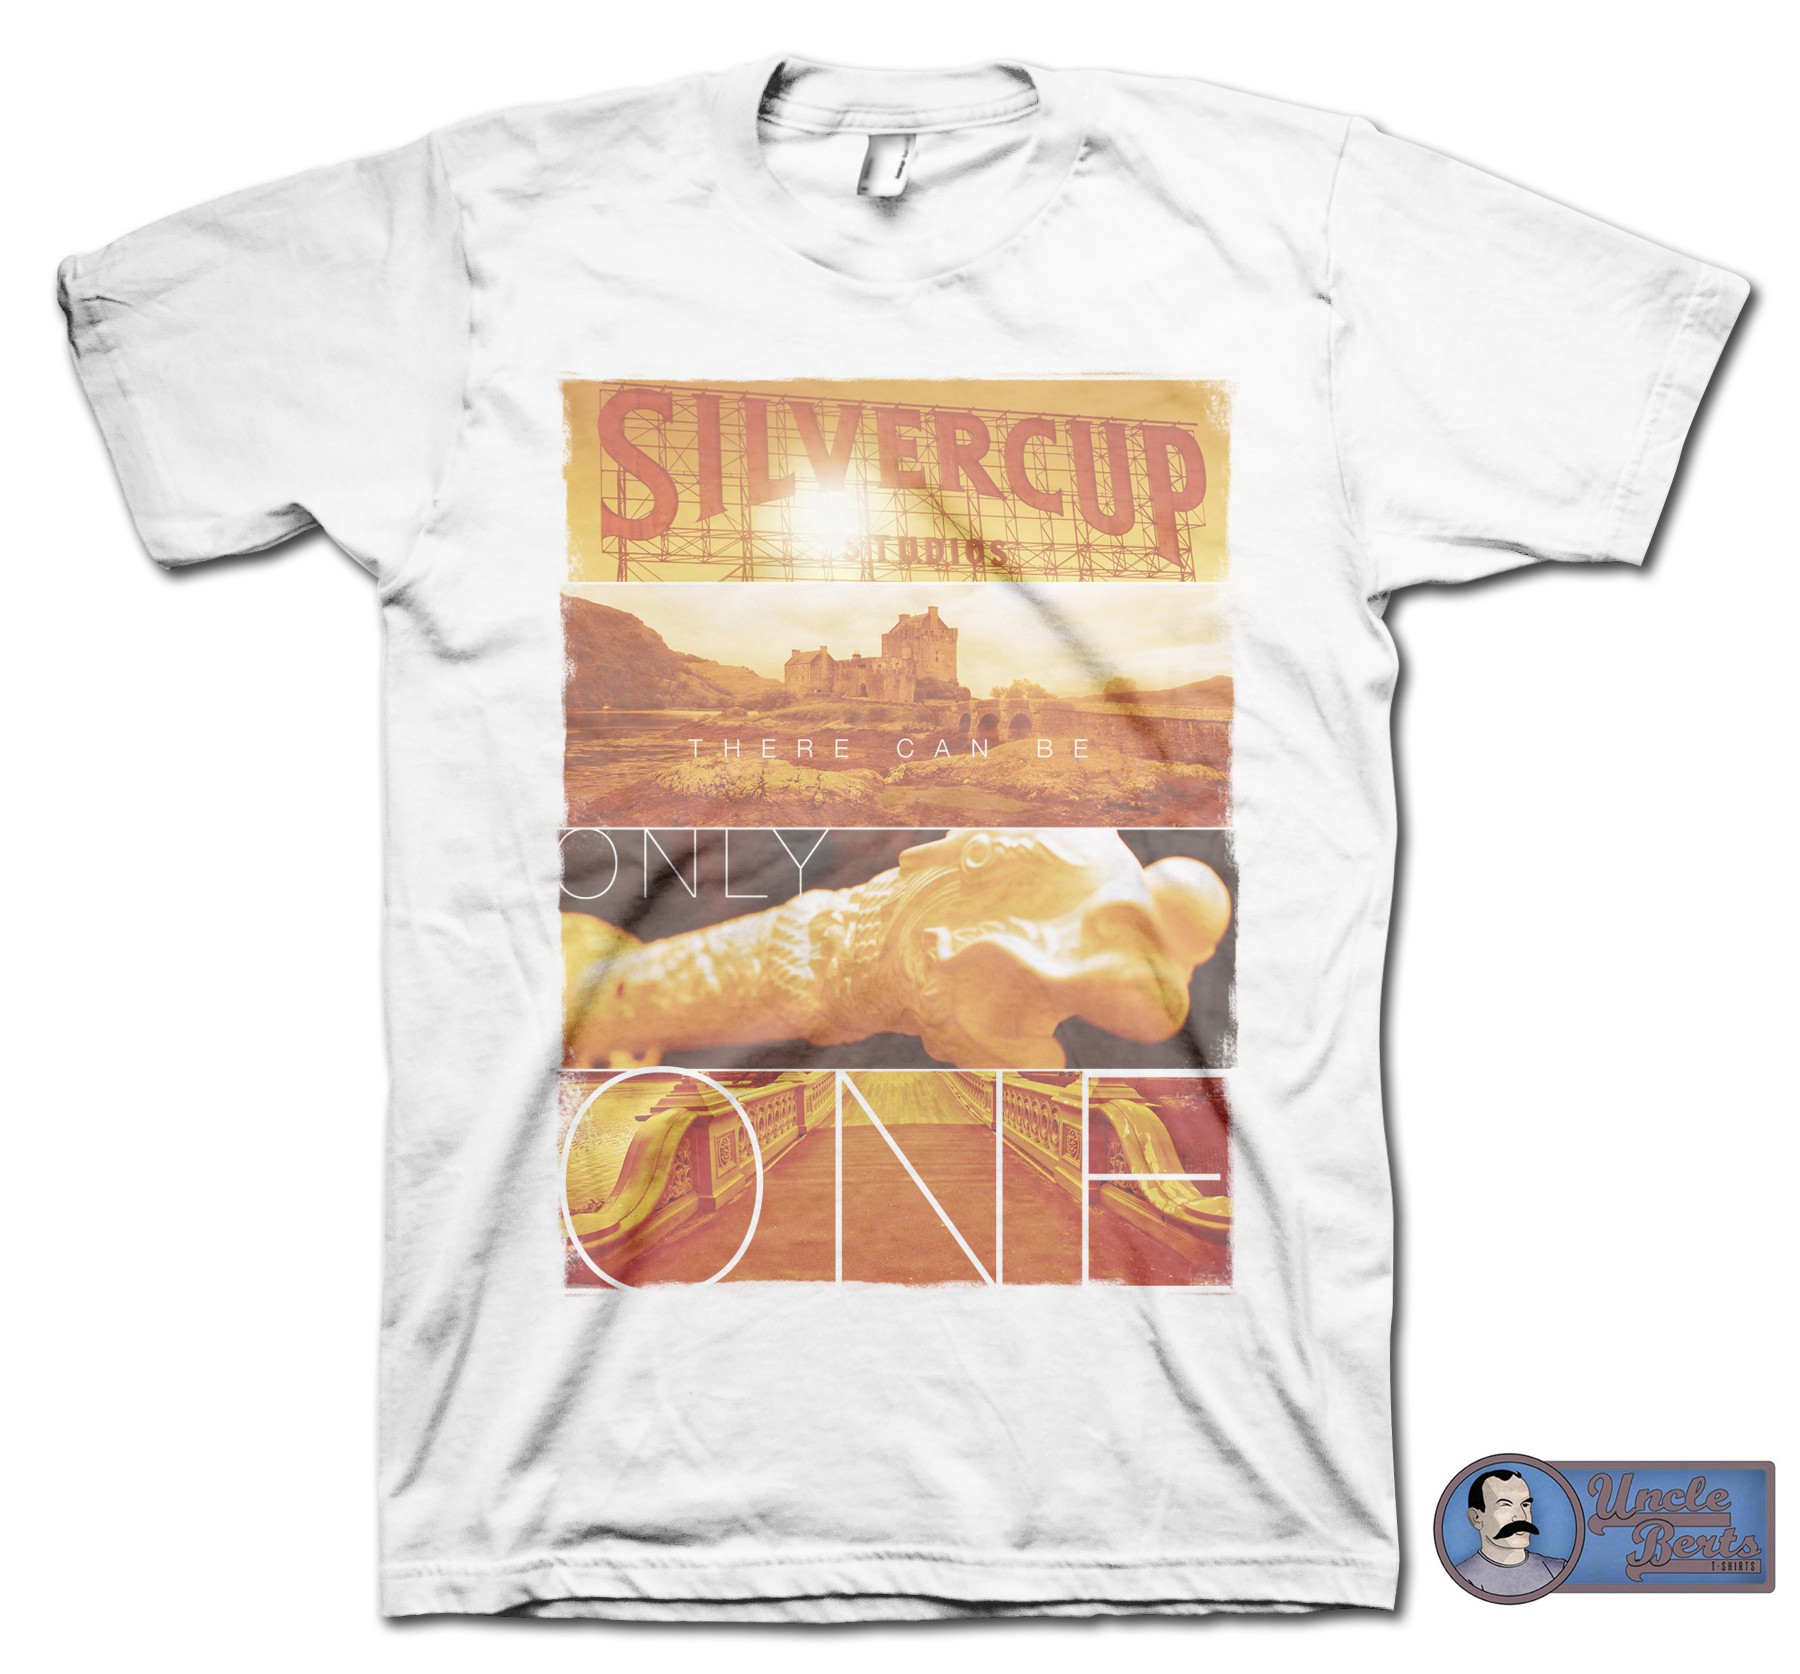 Highlander (1986) inspired Only One T-Shirt